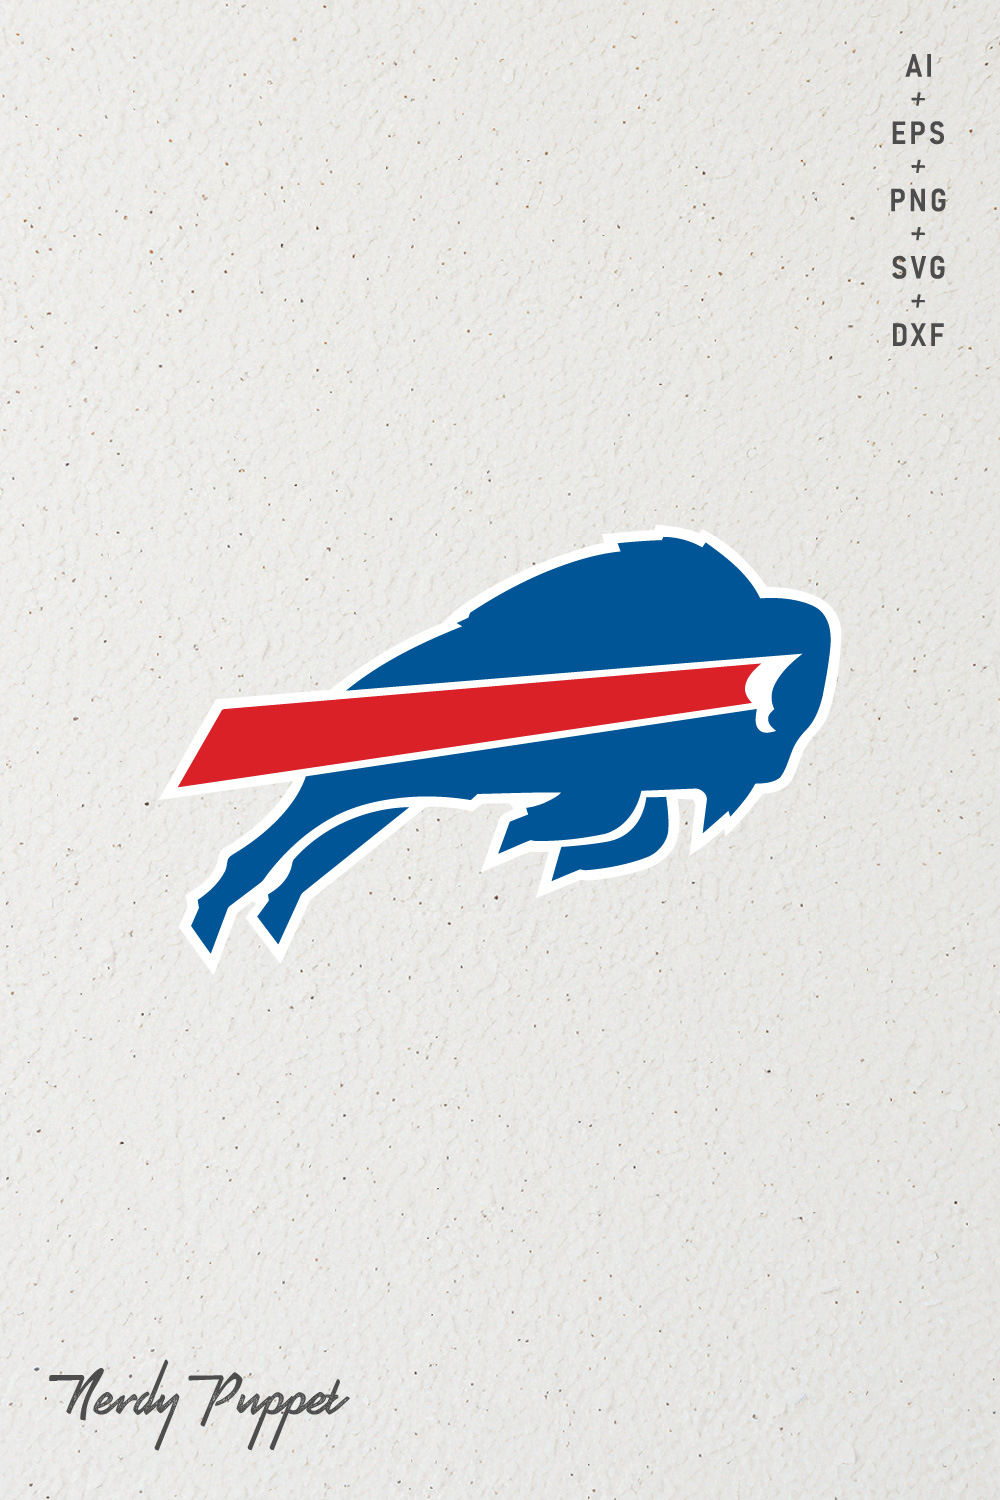 Buffalo Bills pinterest preview image.